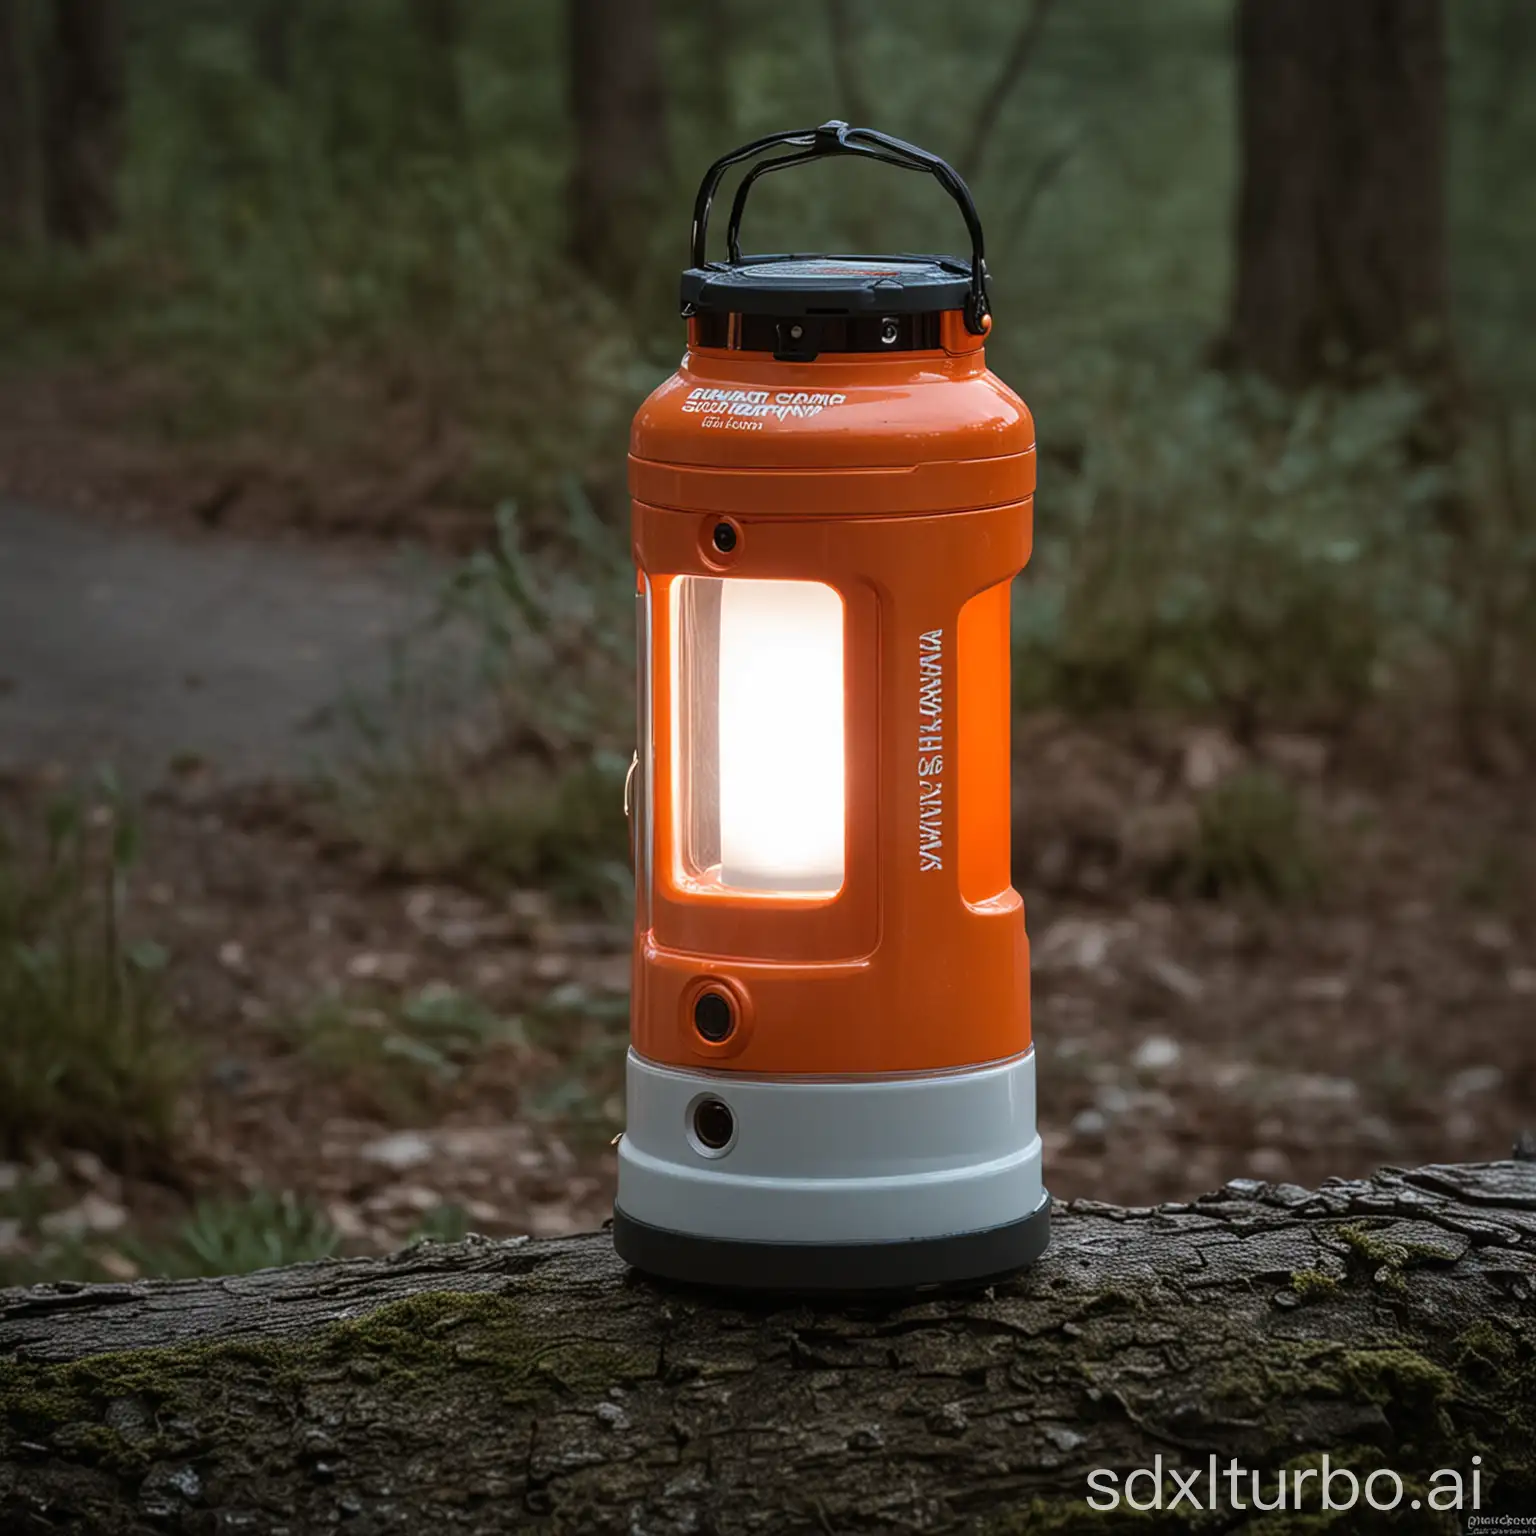 Versatile-Smart-Camp-Emergency-Lantern-Illuminating-Adventures-with-Safety-Features